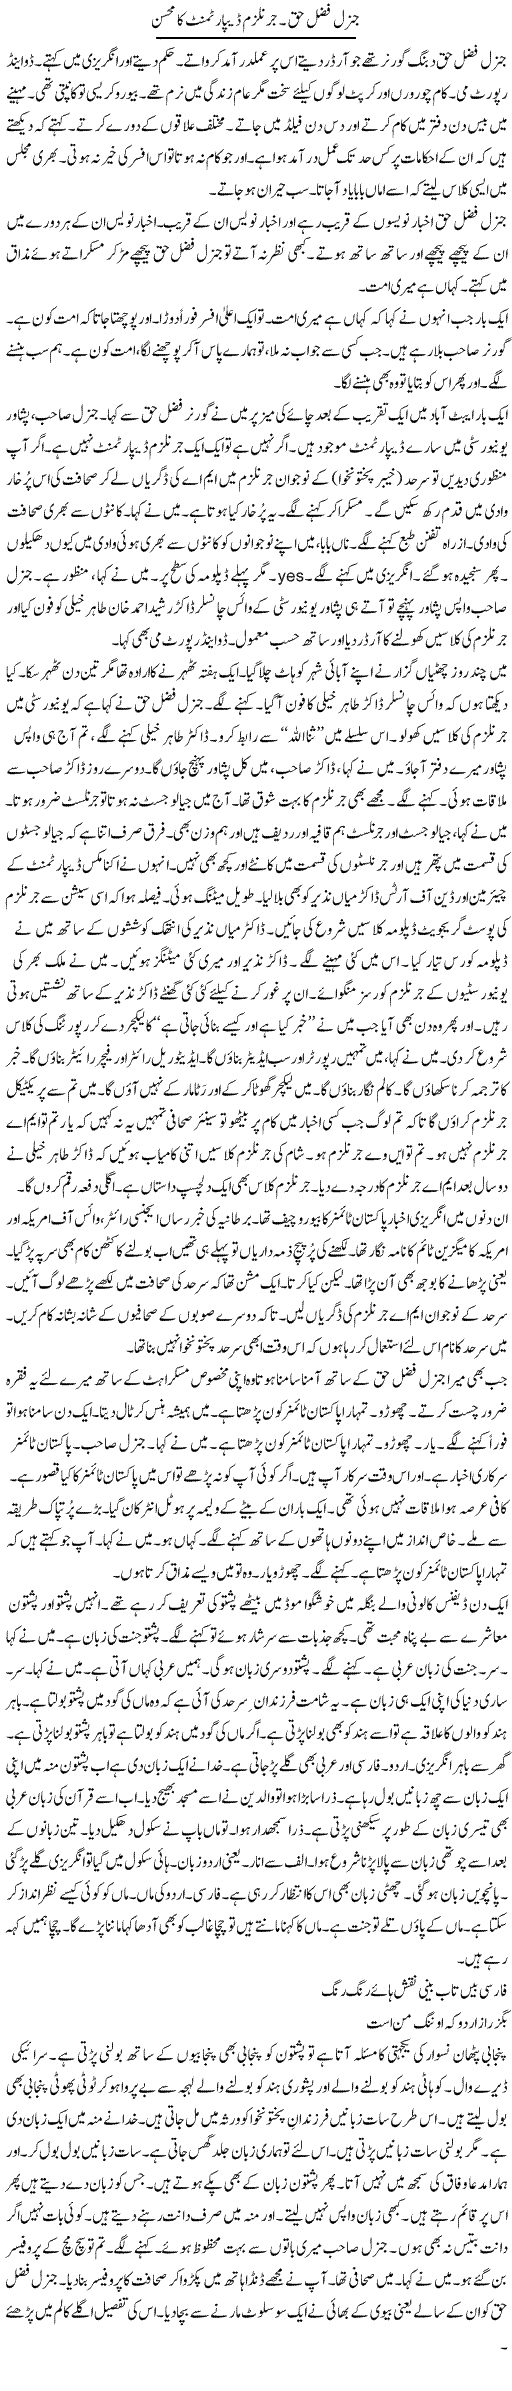 General Fazl Haq. Gernalism Department Ka Mohsin | Hafiz Sanaullah | Daily Urdu Columns